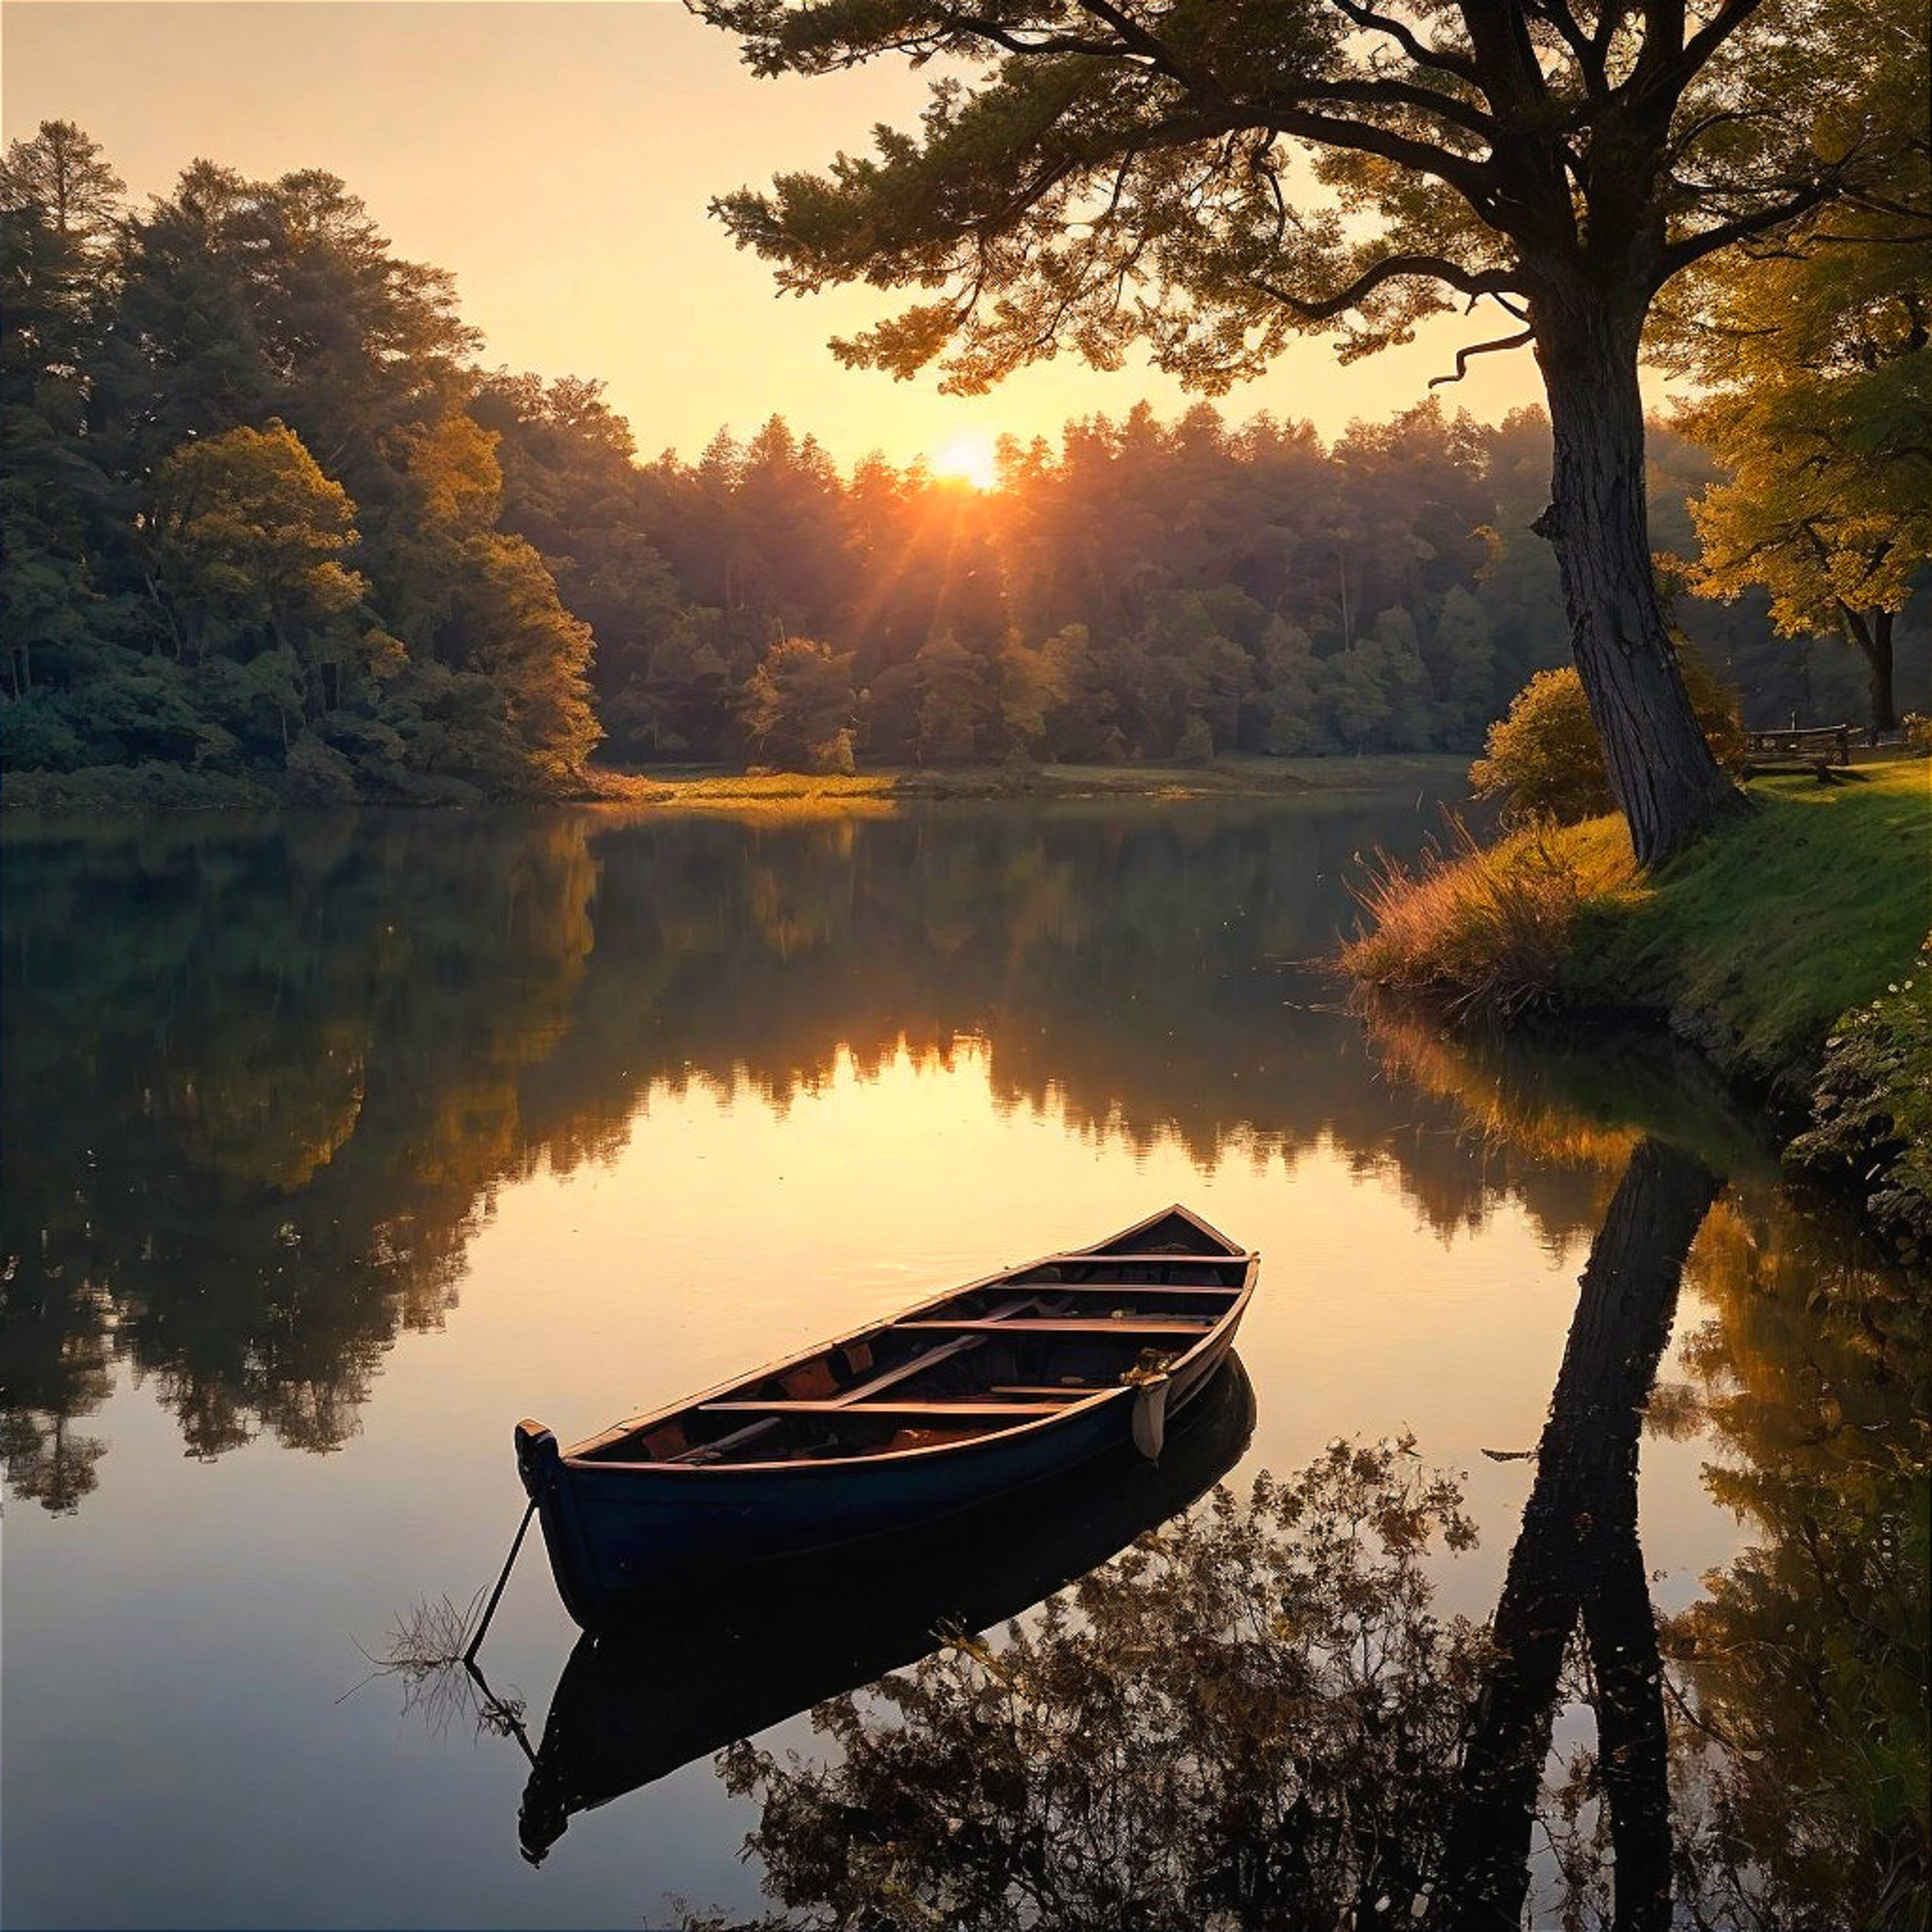 A boat at dawn on the lake